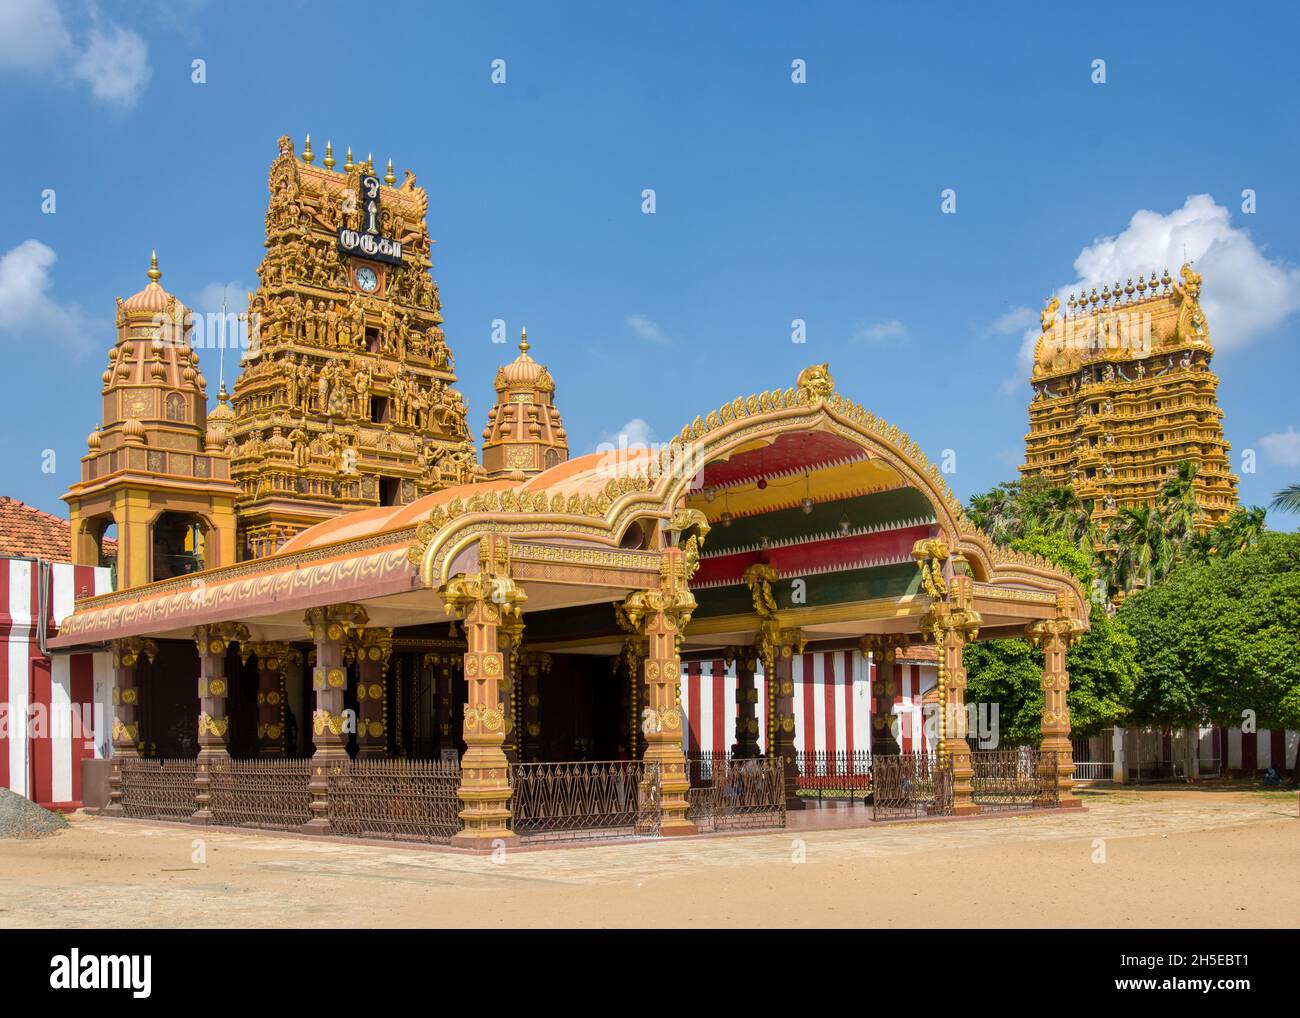 Jaffna, Sri Lanka - 12th January 2020 : The beautiful Nallur Kandaswamy Kovil temple is an important place of worship for local Hindus. Stock Photo